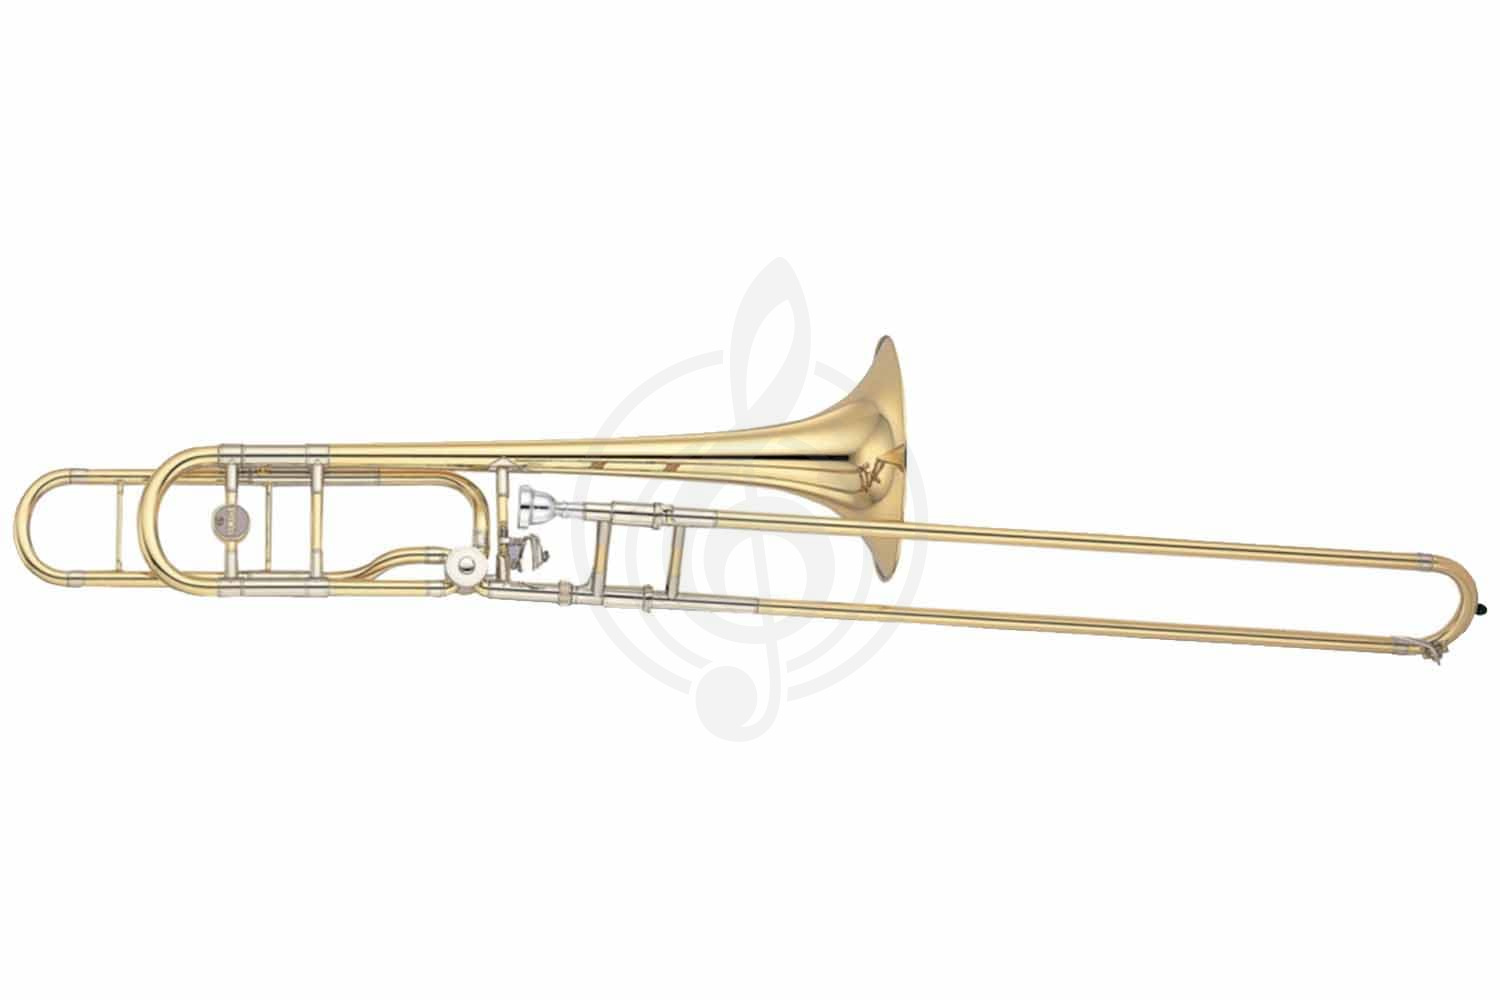 Тромбон Тромбоны Yamaha Yamaha YSL-882O - Bb/ F тромбон тенор профессиональный, 13,89/220мм, Yellow-brass раструб YSL-882O//03 - фото 1